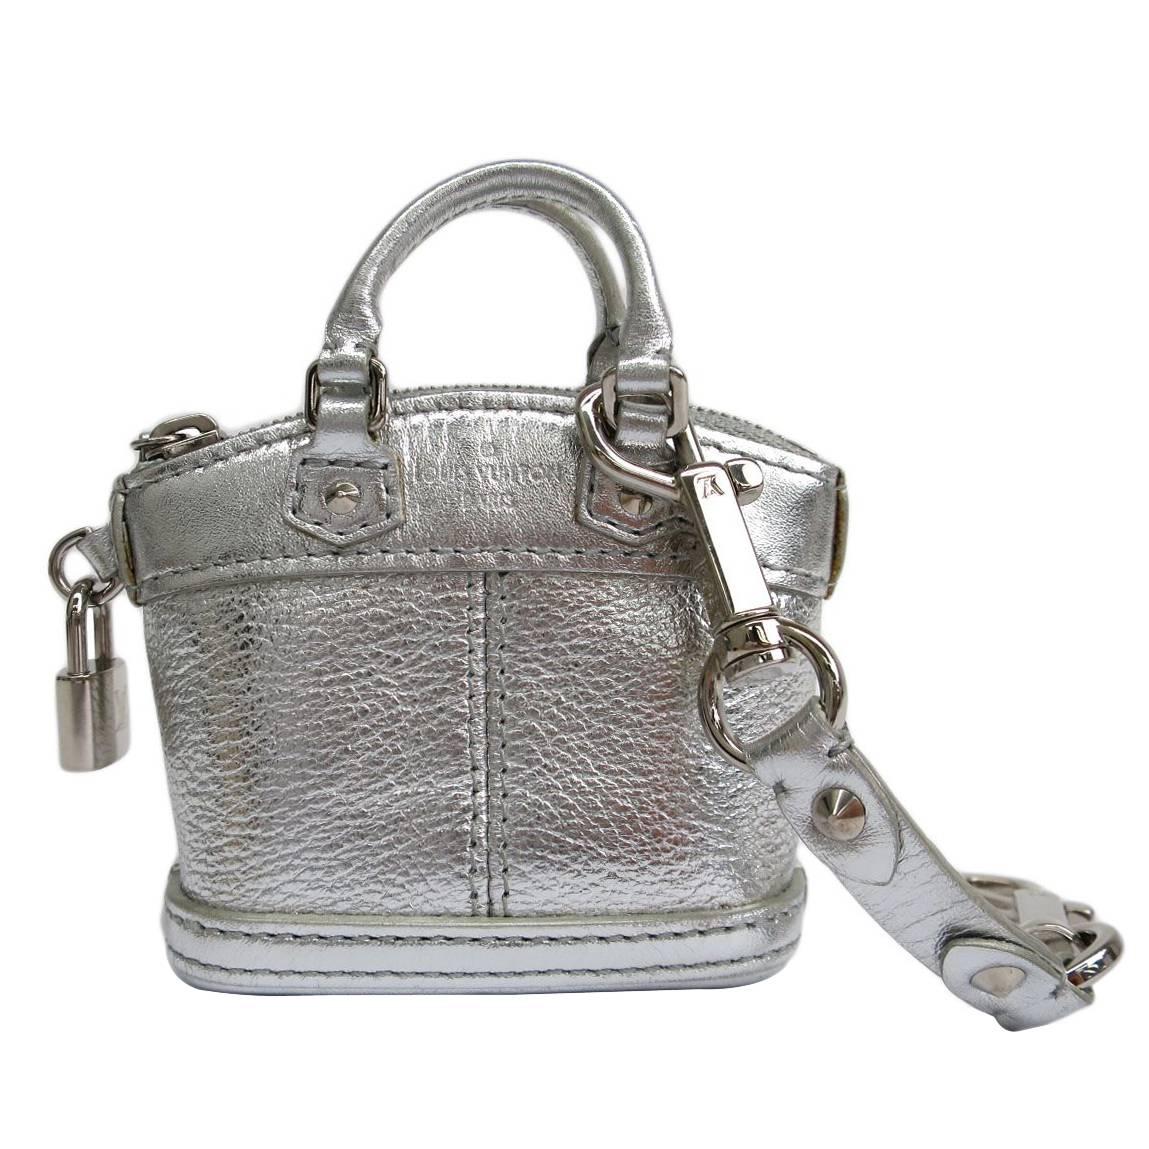 Louis Vuitton Silver Metallic Lockit Mini Handbag Keychain Bag Charm in Box 